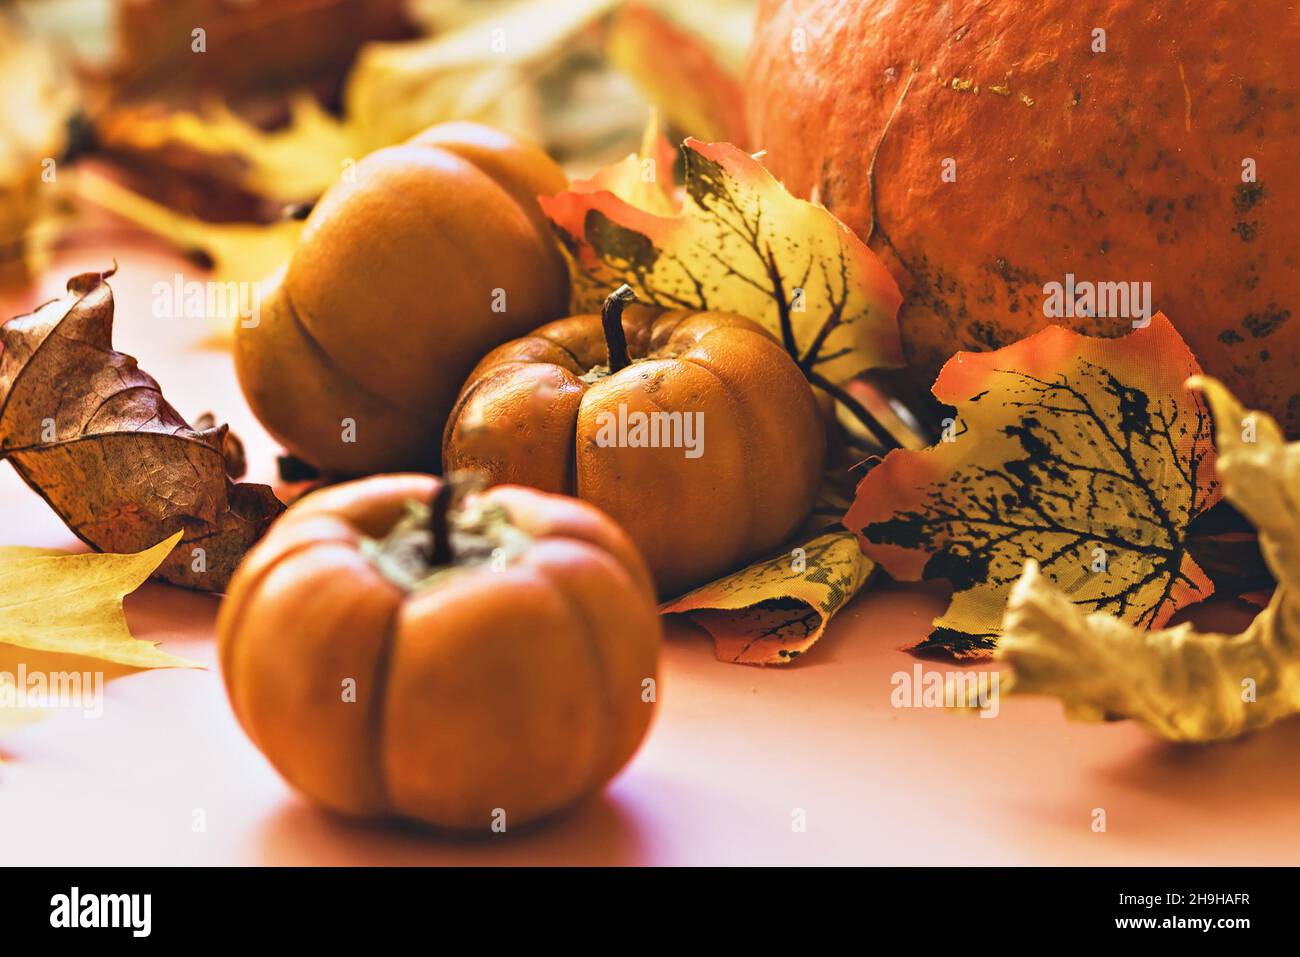 https://c8.alamy.com/comp/2H9HAFR/autumn-still-life-fallen-maple-leaves-and-orange-pumpkins-autumn-harvest-2H9HAFR.jpg